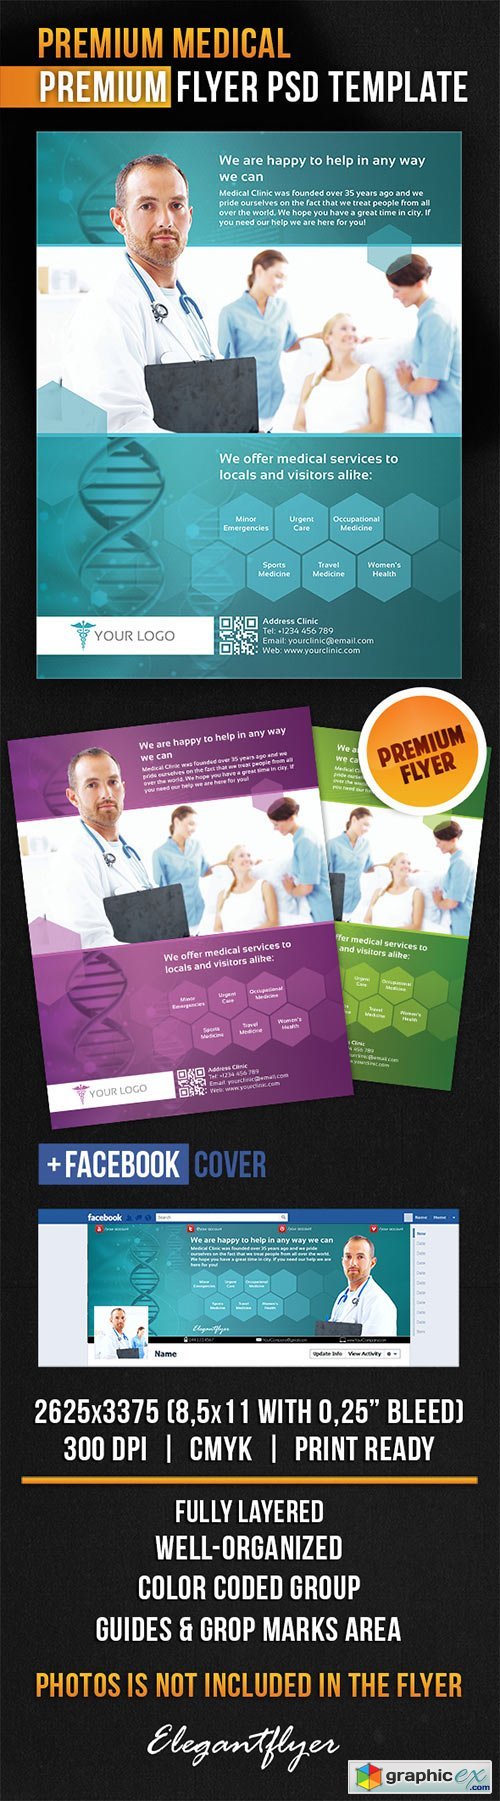 Premium Medical Flyer PSD Template + Facebook Cover